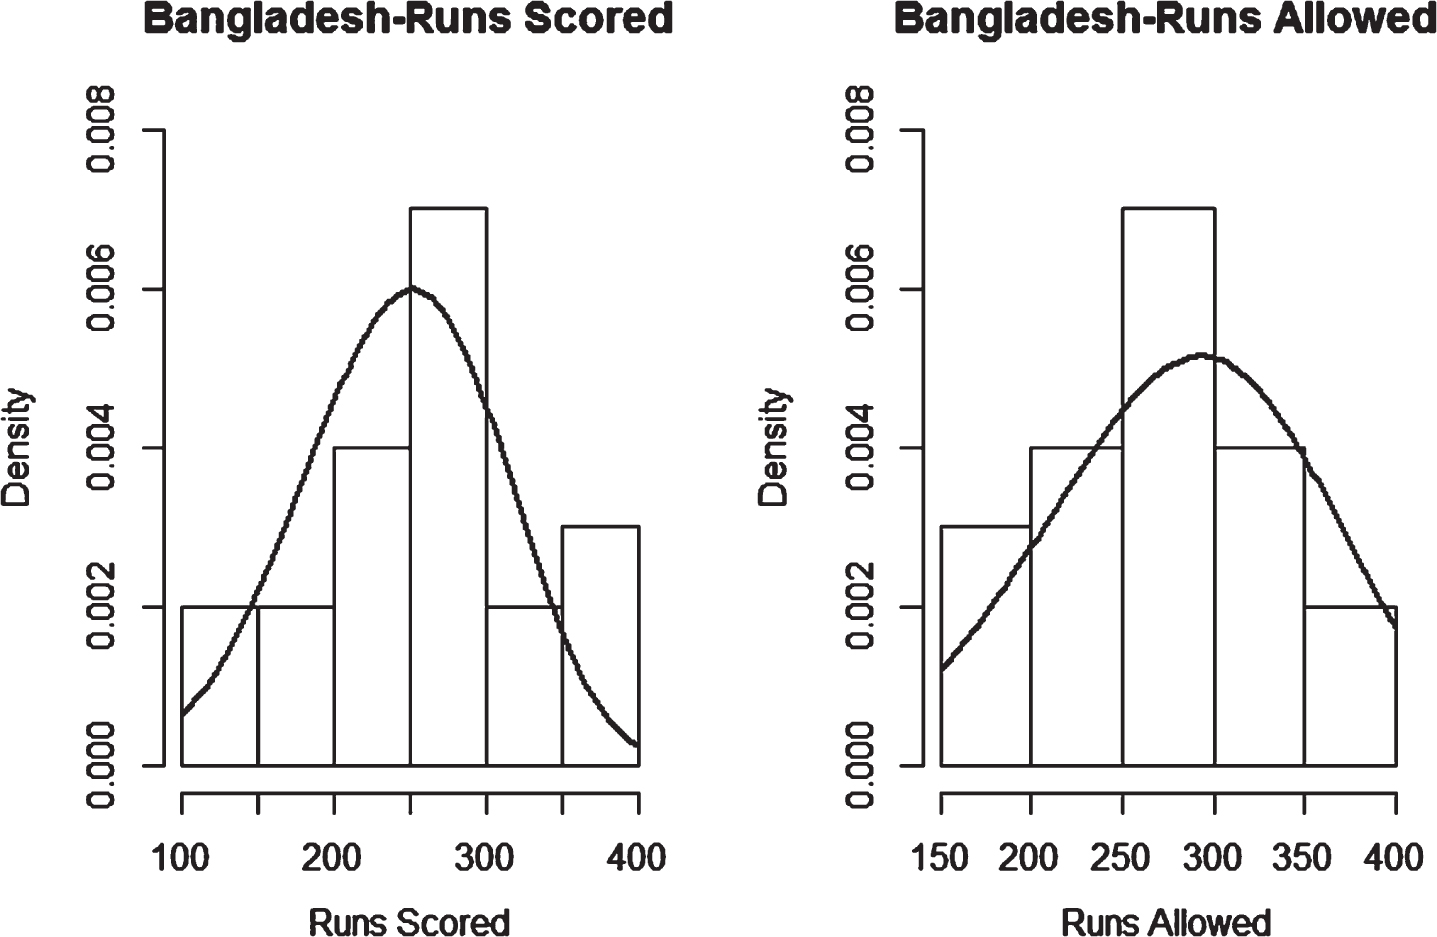 Weibull Distribution Fit for Runs Scored and Runs Allowed for Bangladesh using Maximum Likelihood Method (ODI).